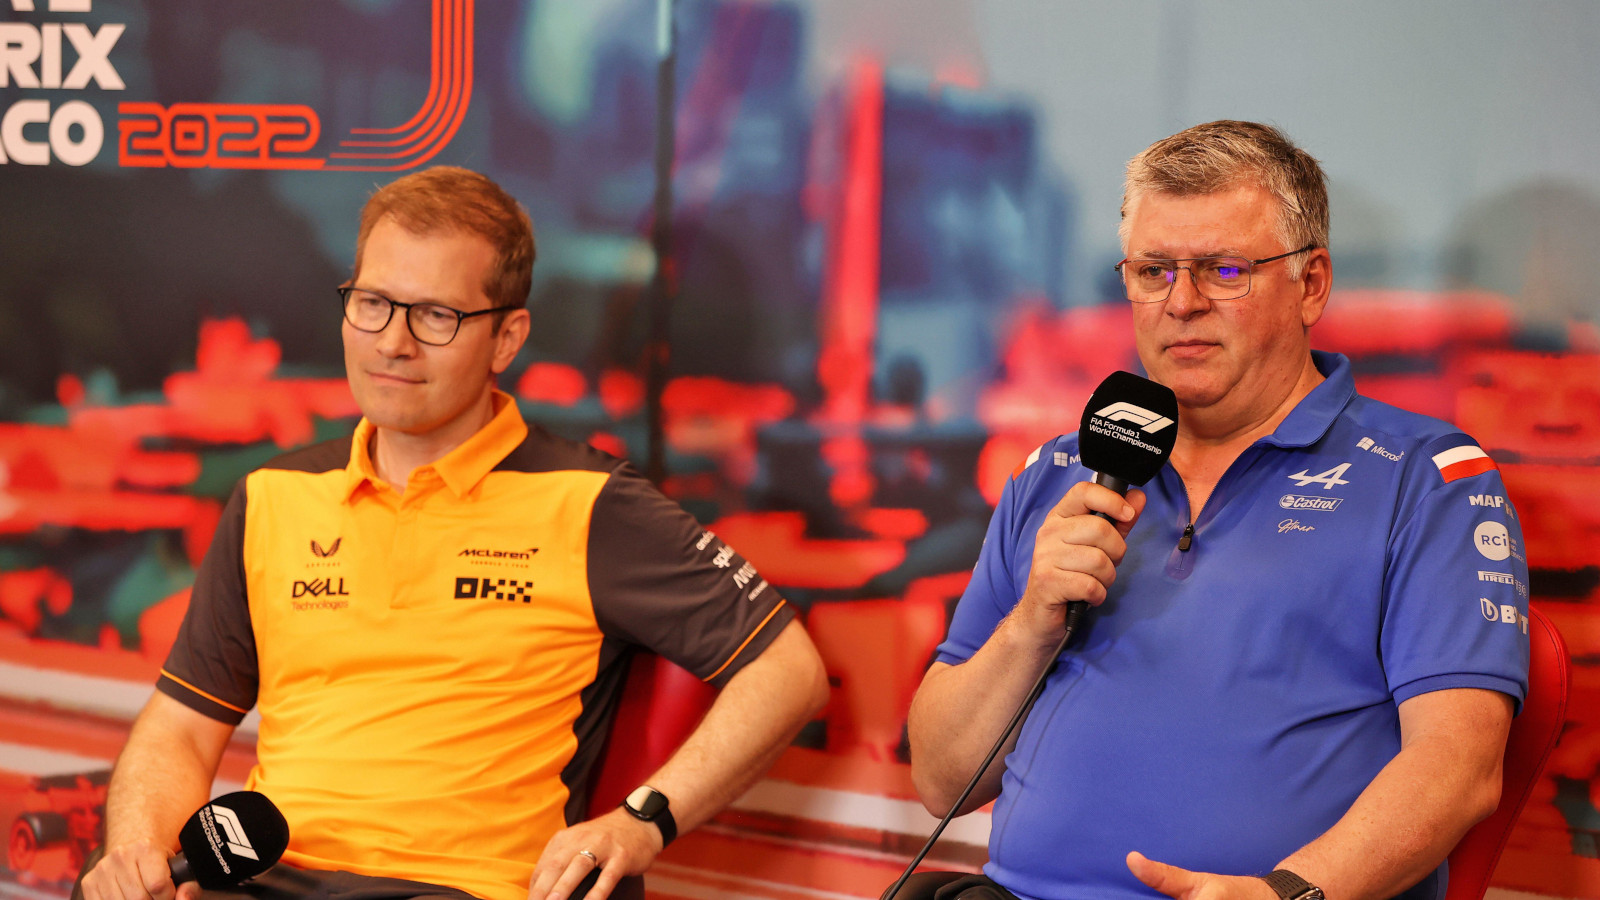 Otmar Szafnauer and McLaren team principal Andreas Seild in a press conference. Monaco May 2022